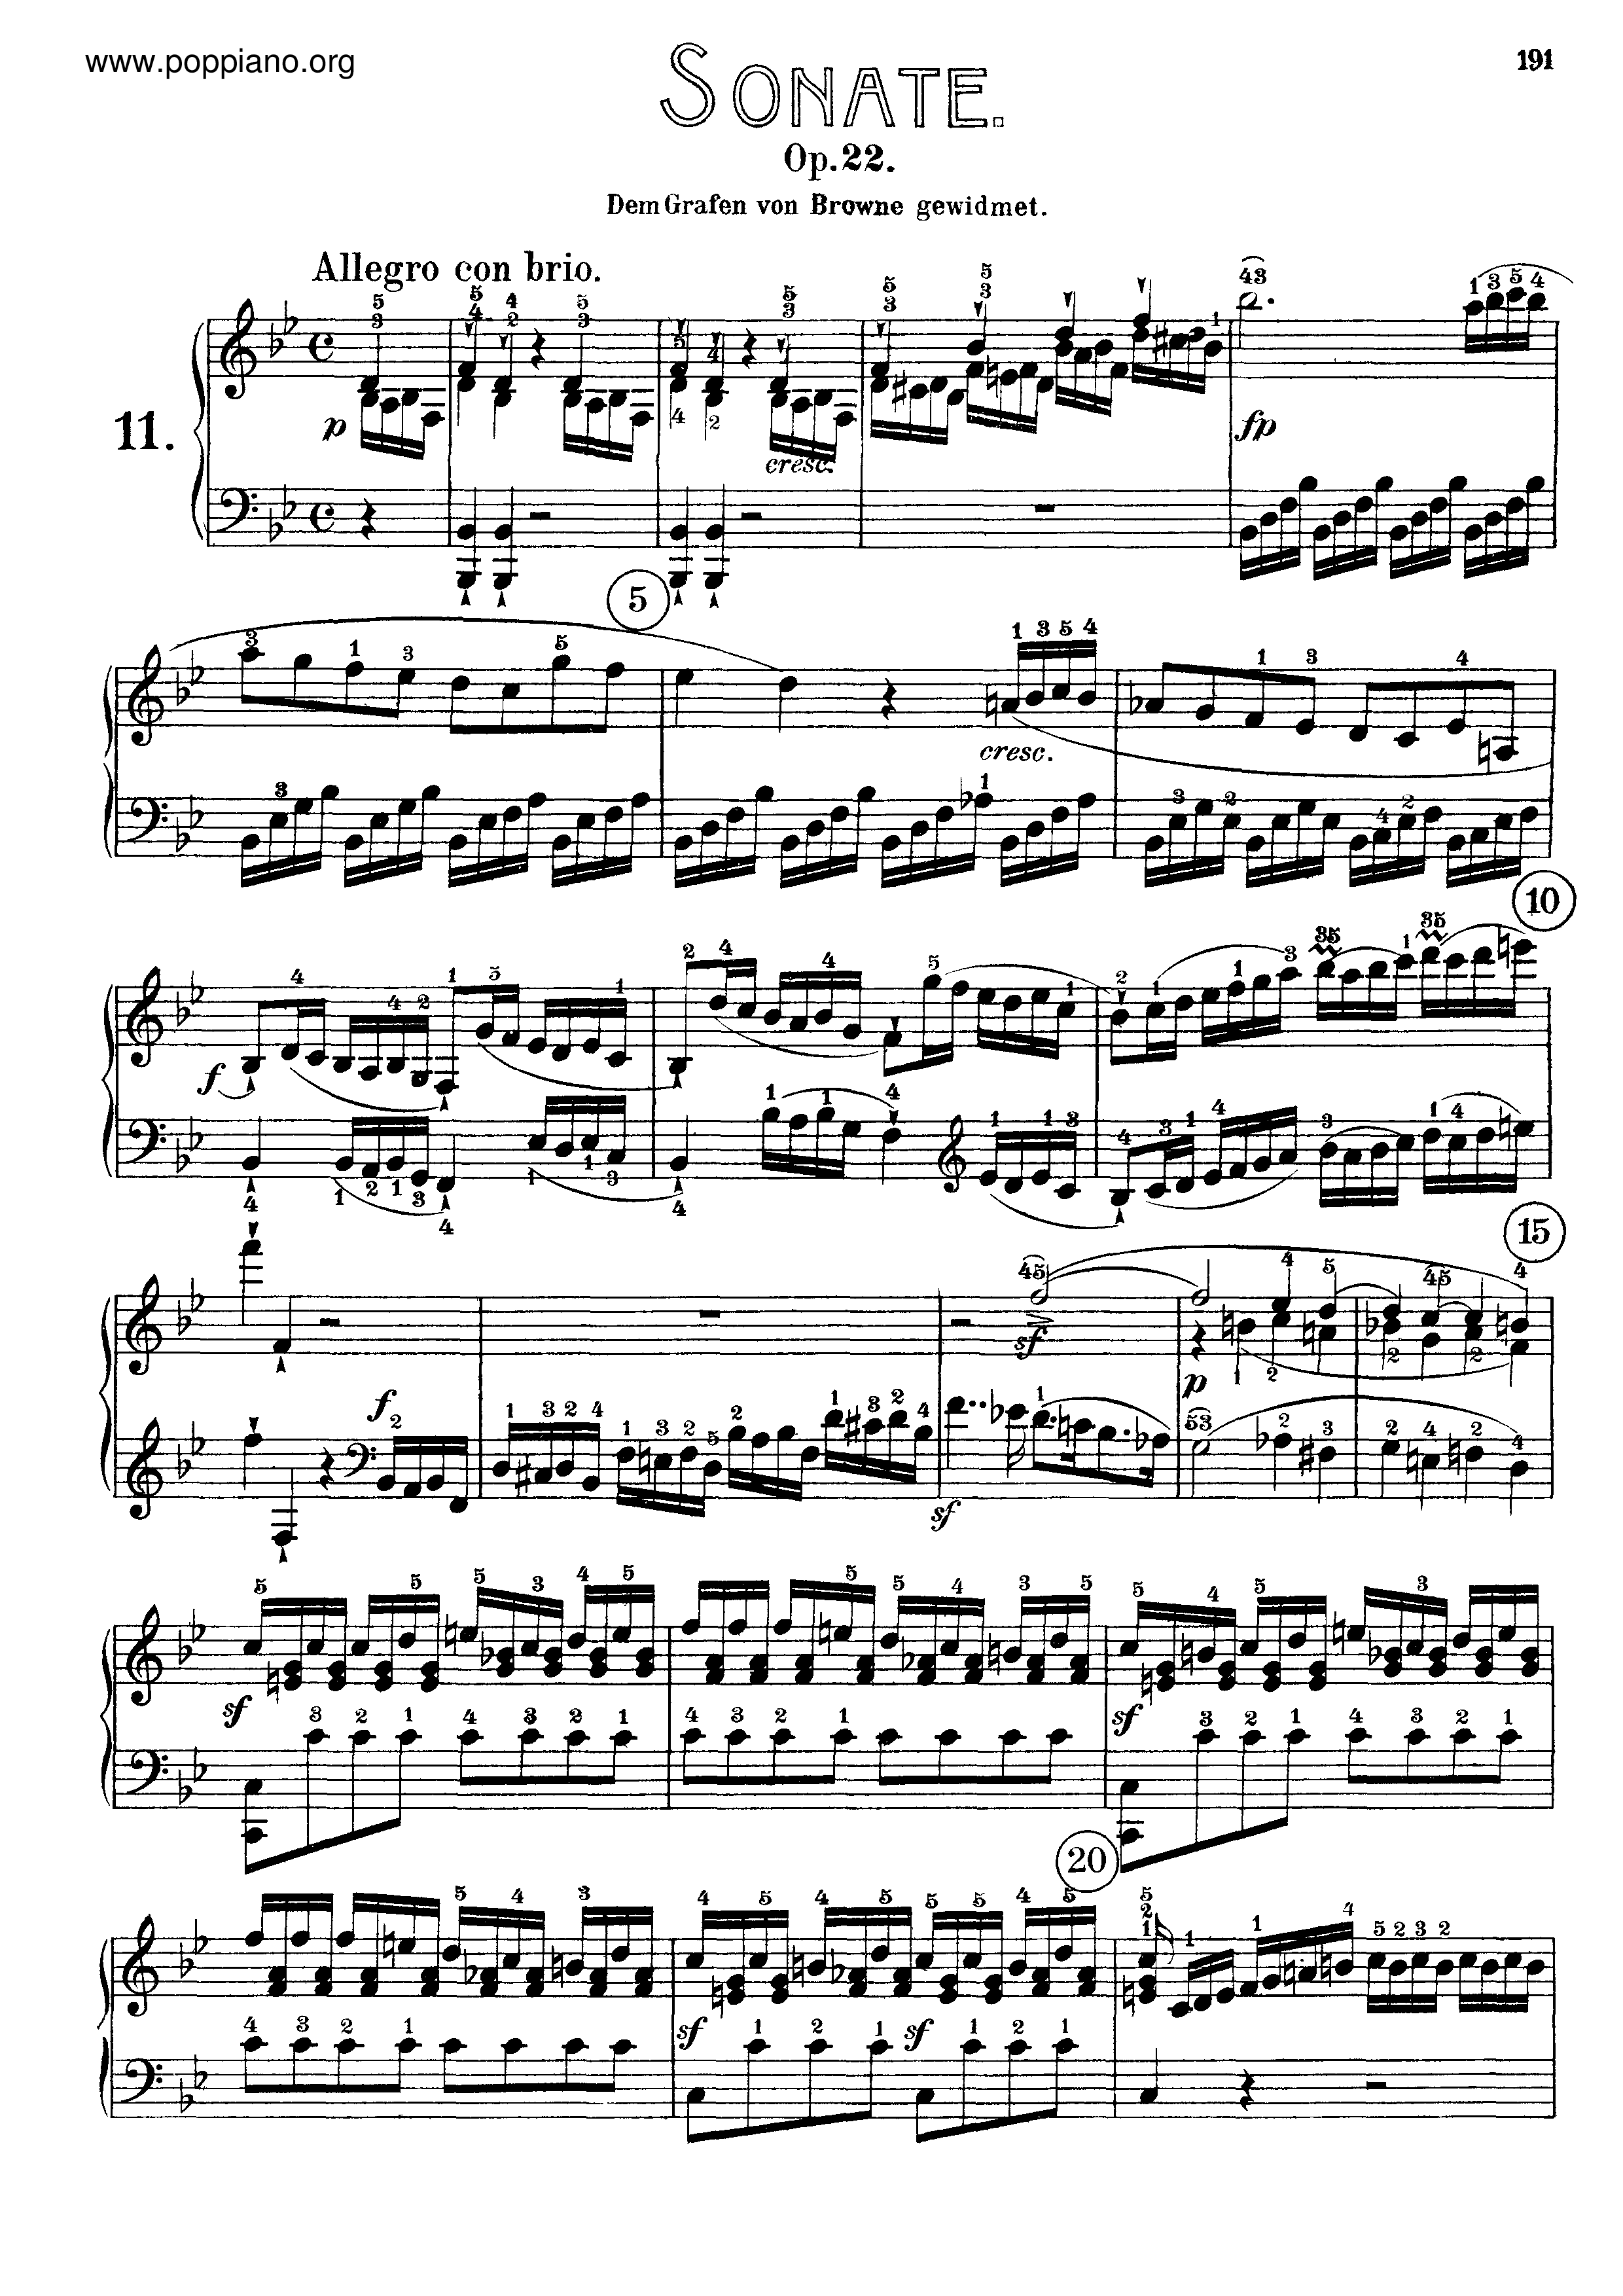 Sonata No. 11 in B-flat major琴譜